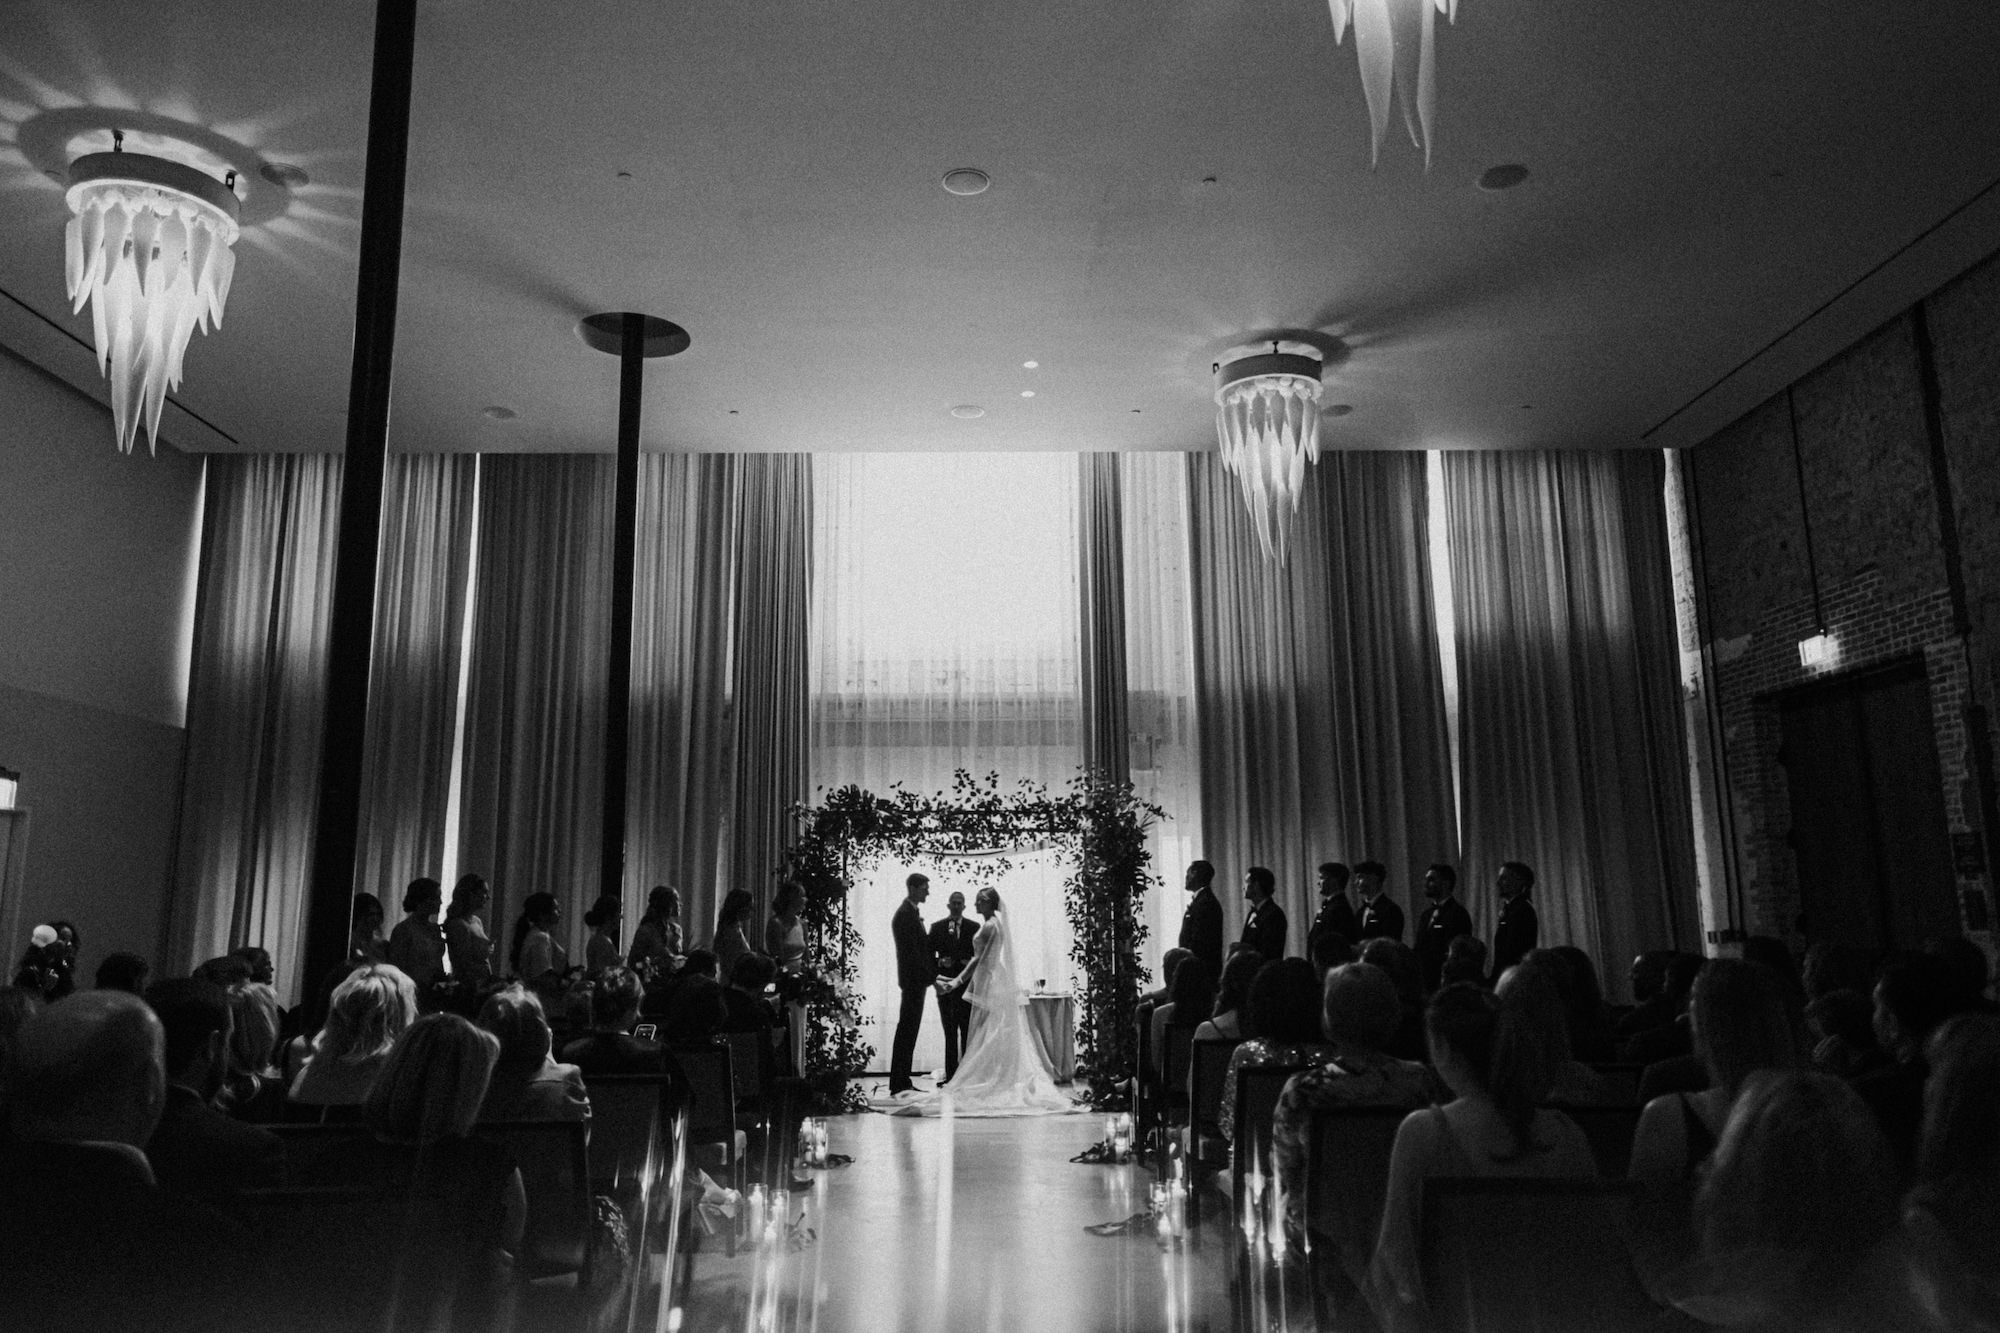 Modern Minimalist Greenery Ceremony Arch and Candlelit Aisle Decor | Tampa Bay Wedding Planner Coastal Coordinating | Ybor City Wedding Venue Hotel Haya Valencia Ballroom | Florist Monarch Events and Design